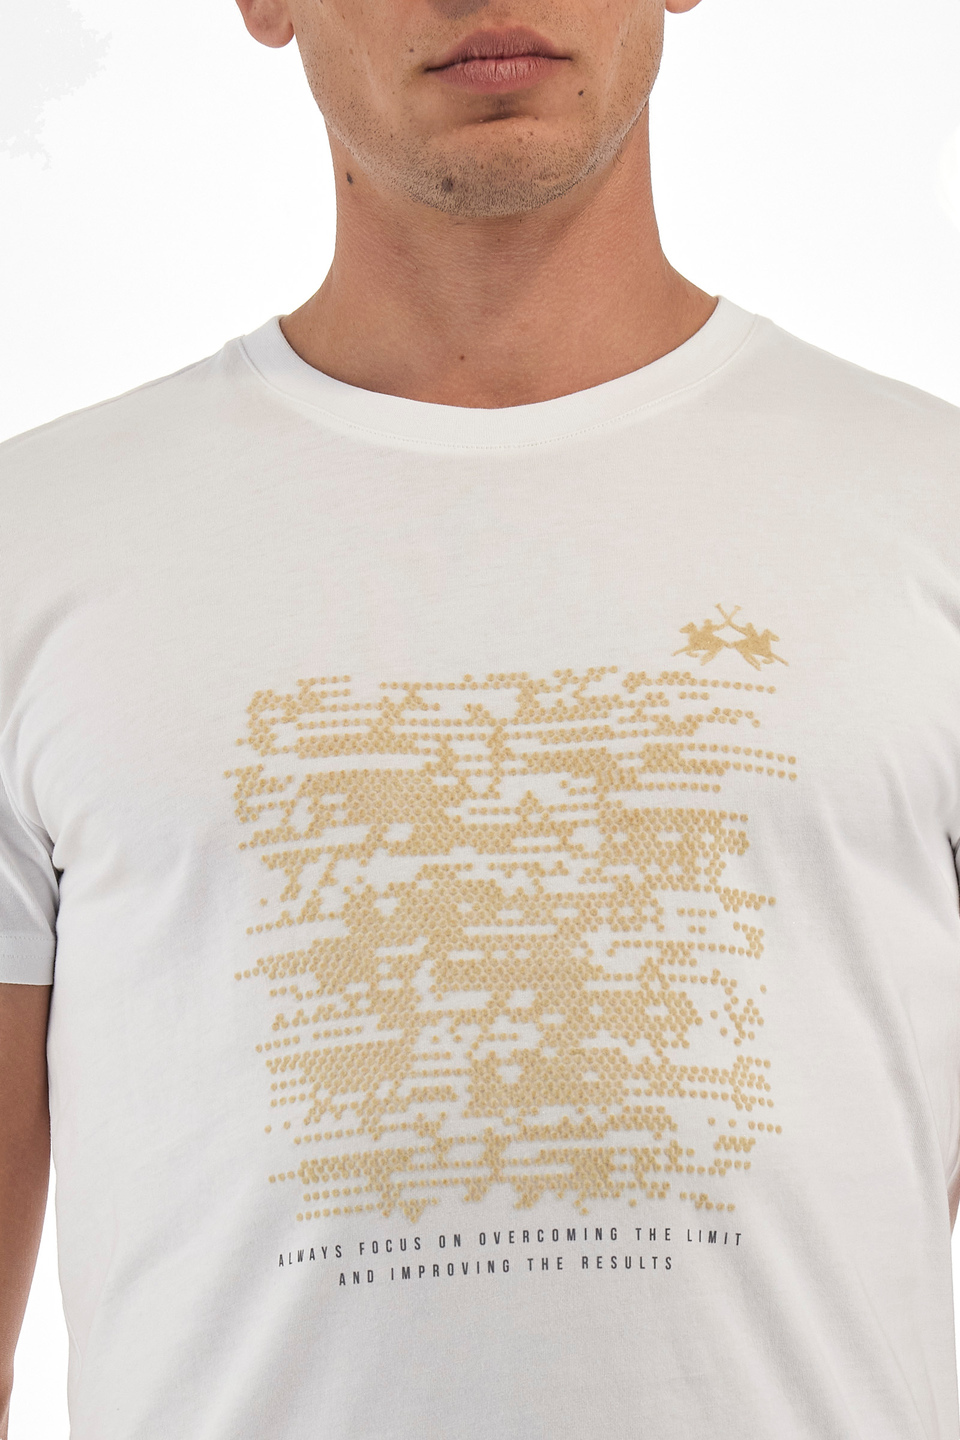 Men's T-shirts in a regular fit - Winchester | La Martina - Official Online Shop